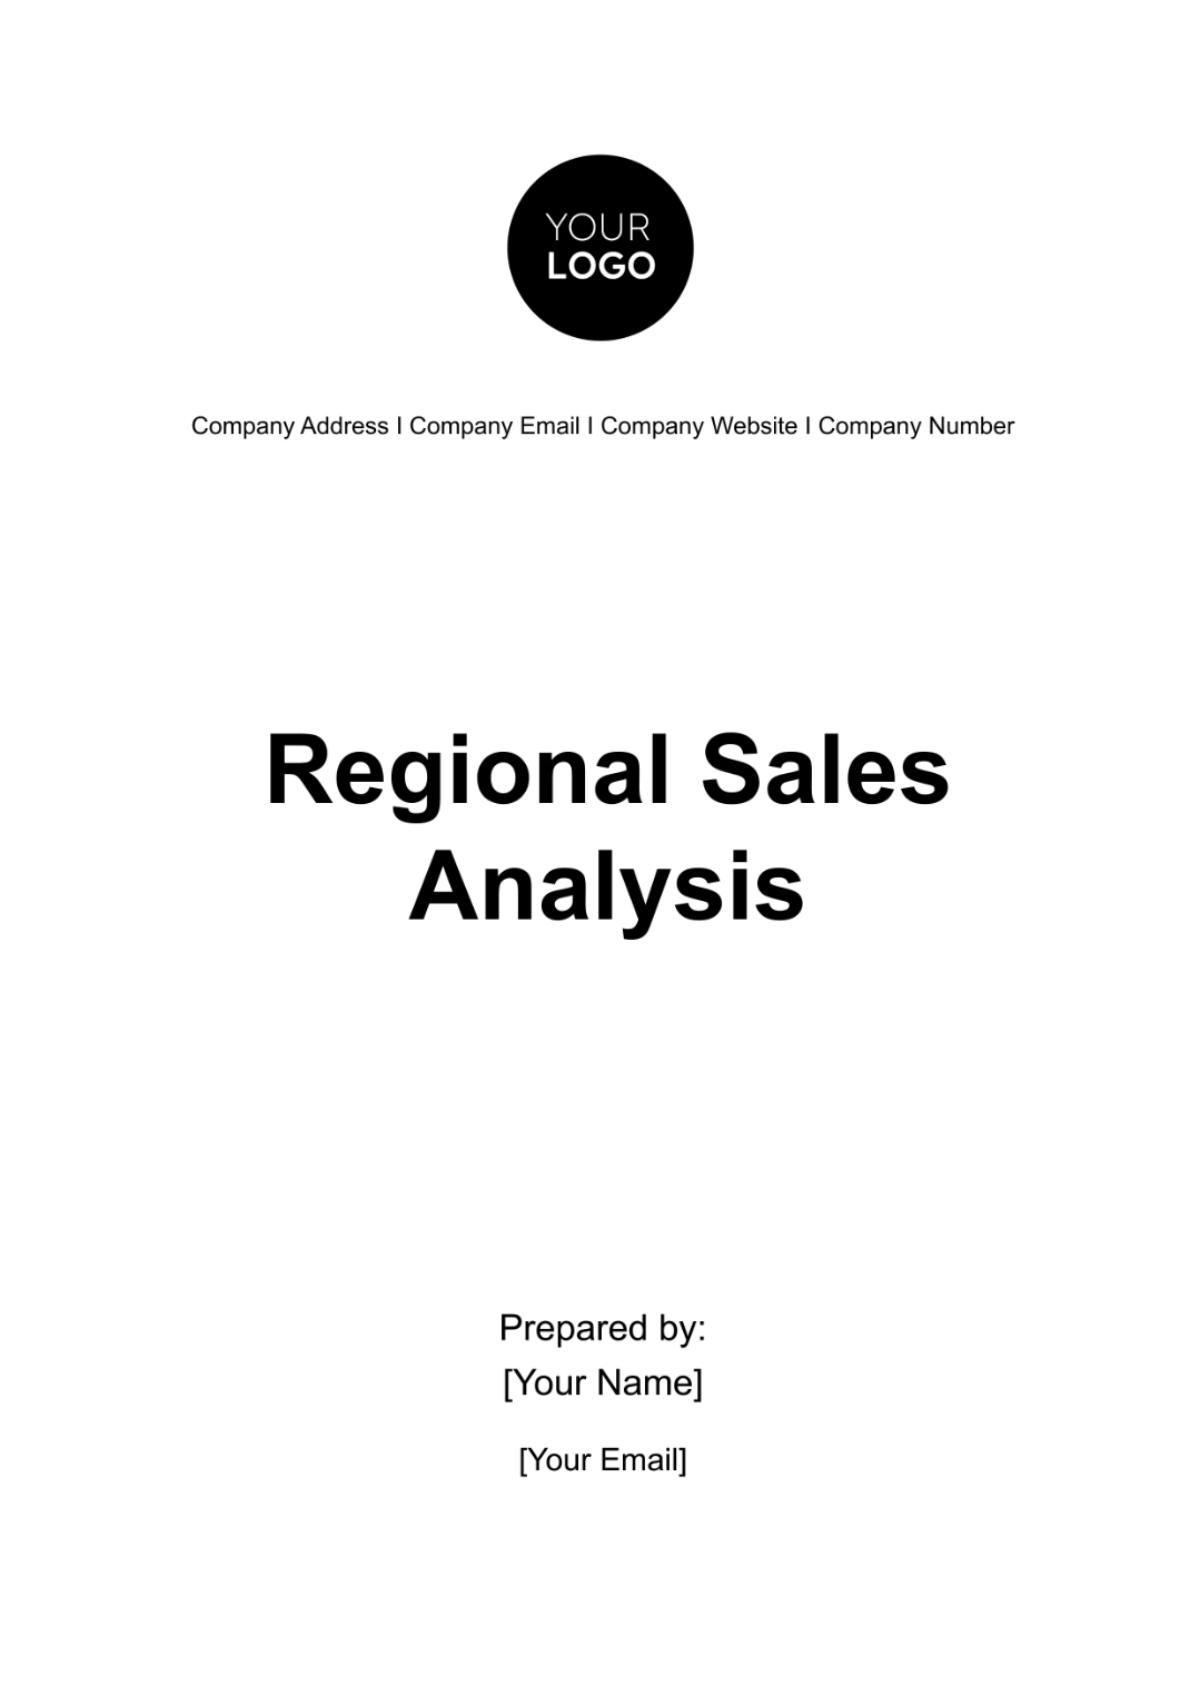 Regional Sales Analysis Template